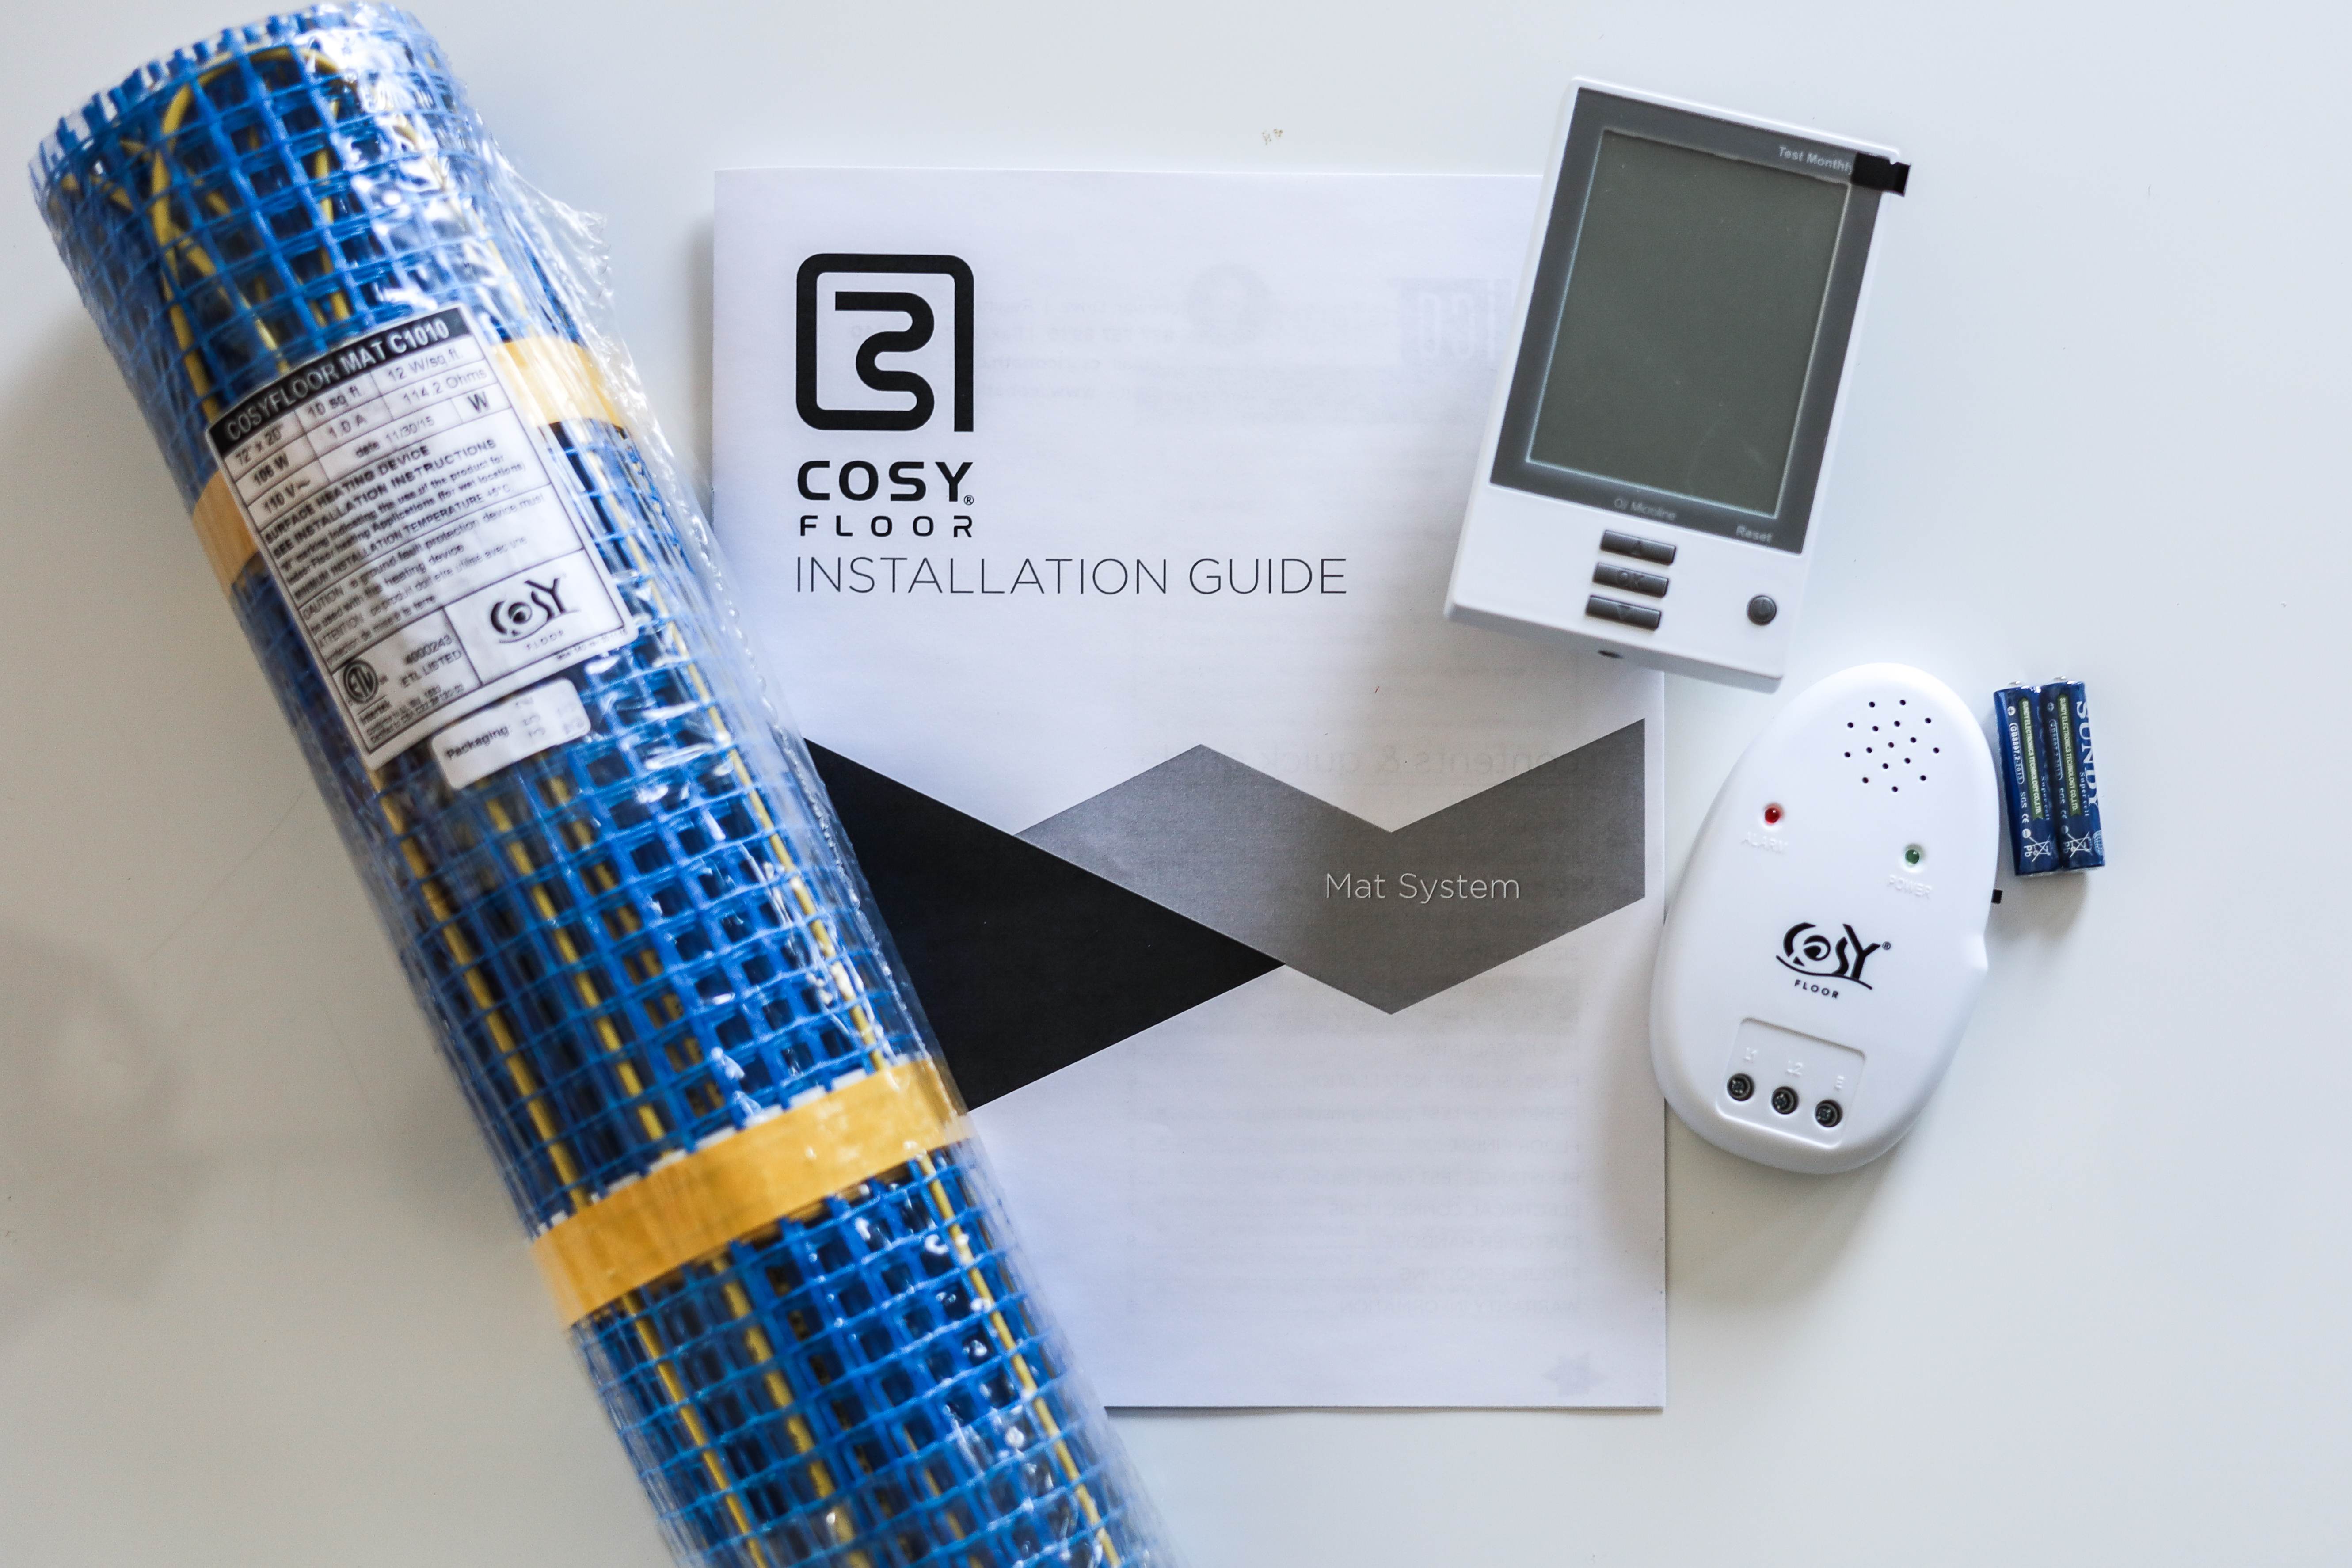 CosyFloor (C1080S) product